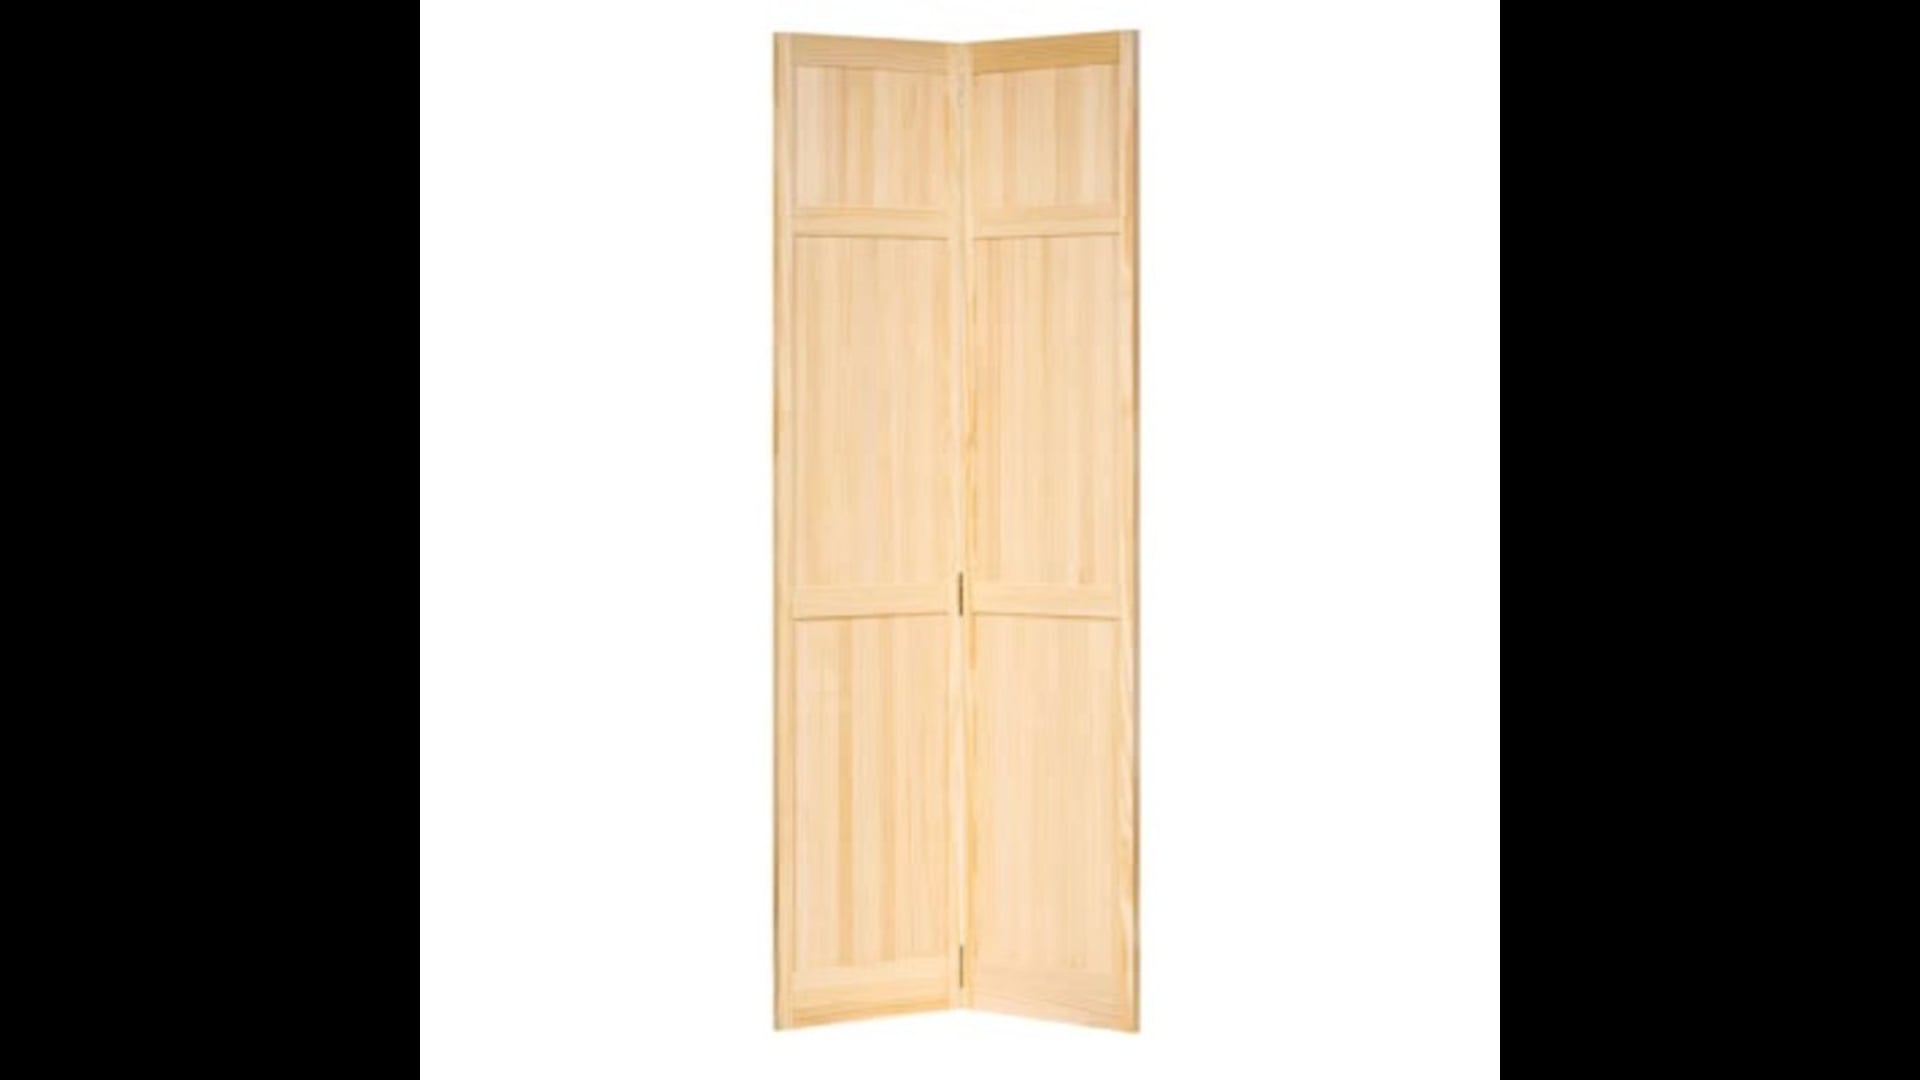 28"x80 Antique Vintage Old Interior SOLID Wood Wooden Interior Closet Door Panel 